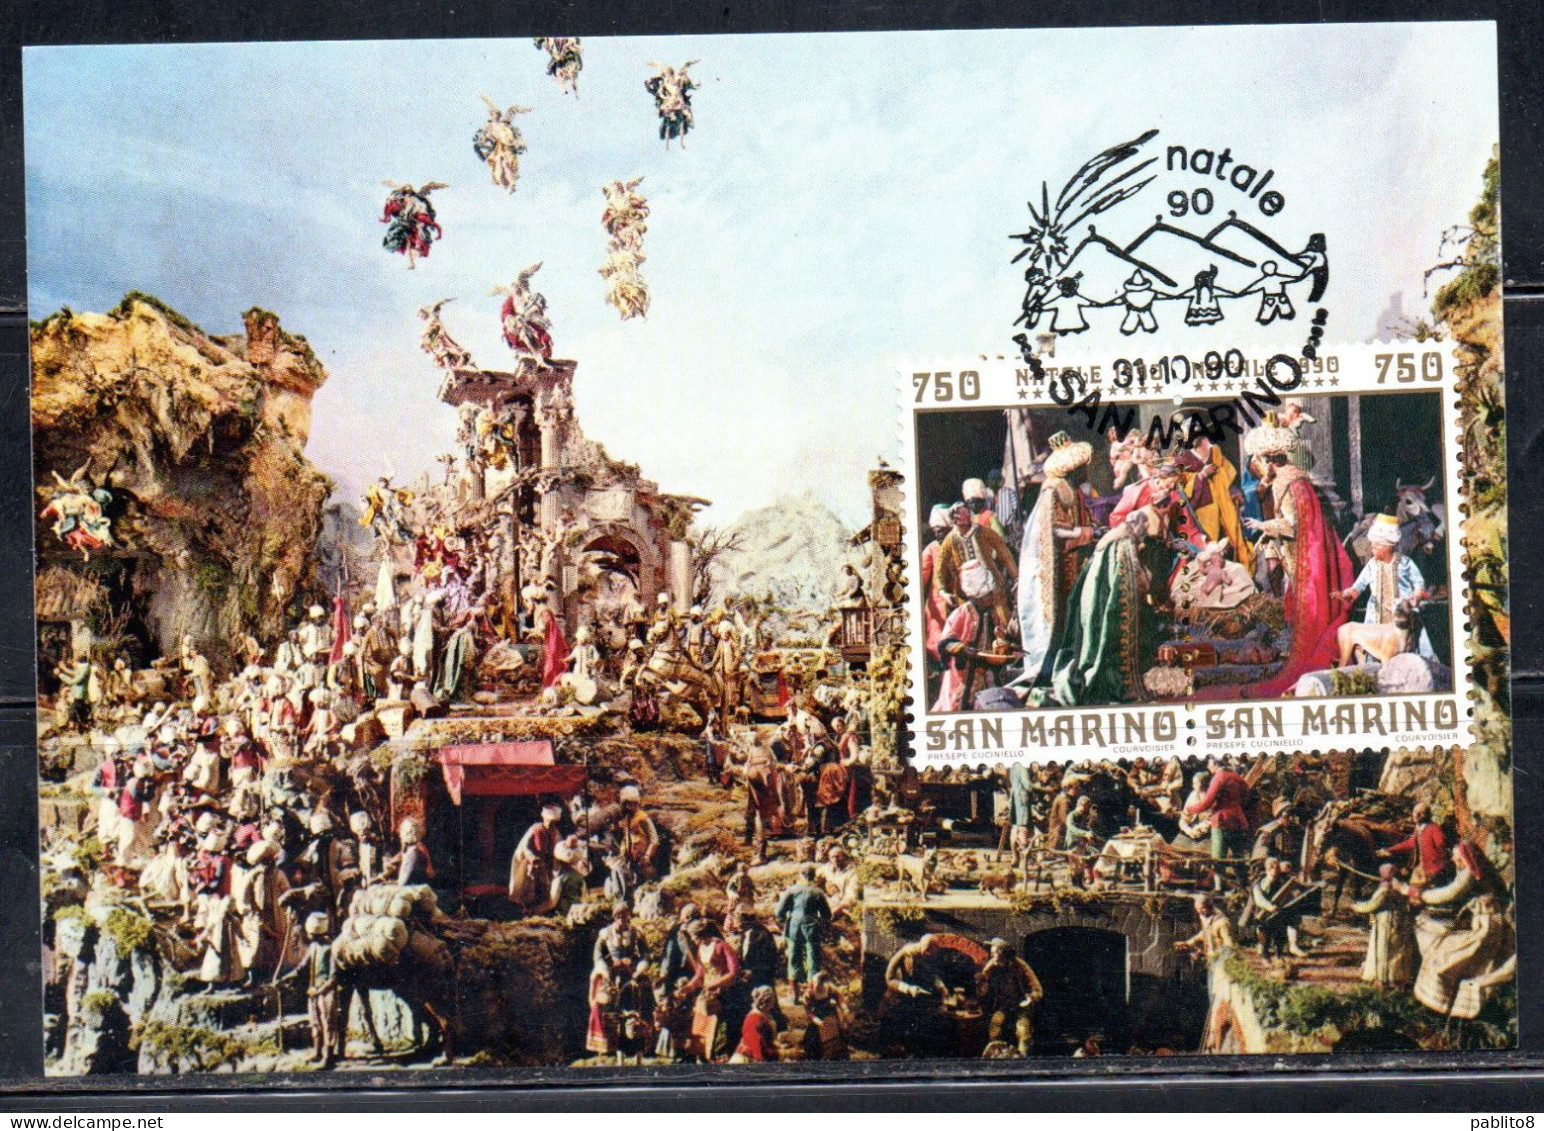 REPUBBLICA DI SAN MARINO 1990 NATALE CHRISTMAS NOEL WEIHNACHTEN NAVIDAD SERIE DITTICO MAXI MAXIMUM CARD CARTOLINA CARTE - FDC